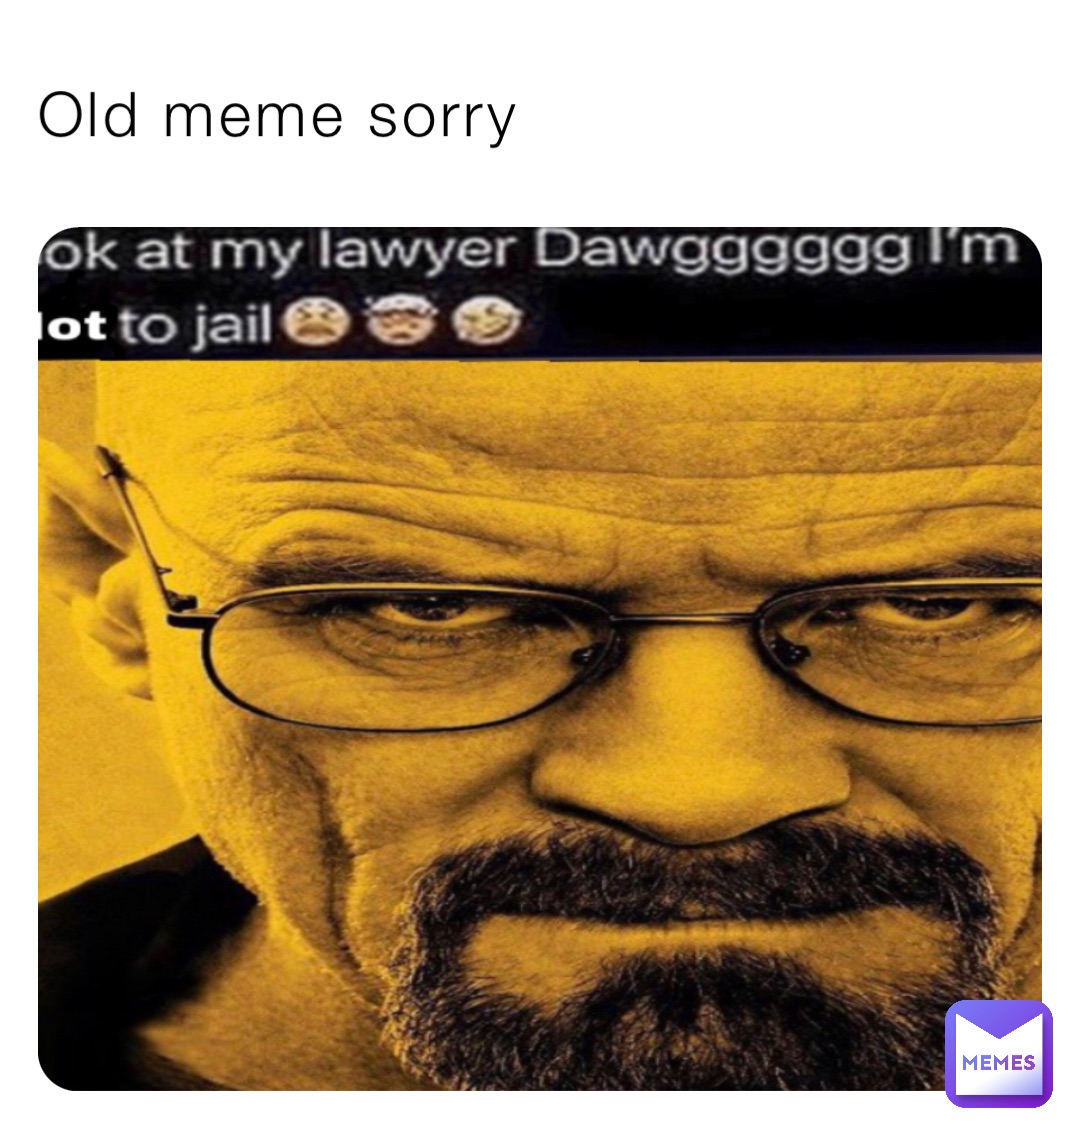 Old meme sorry